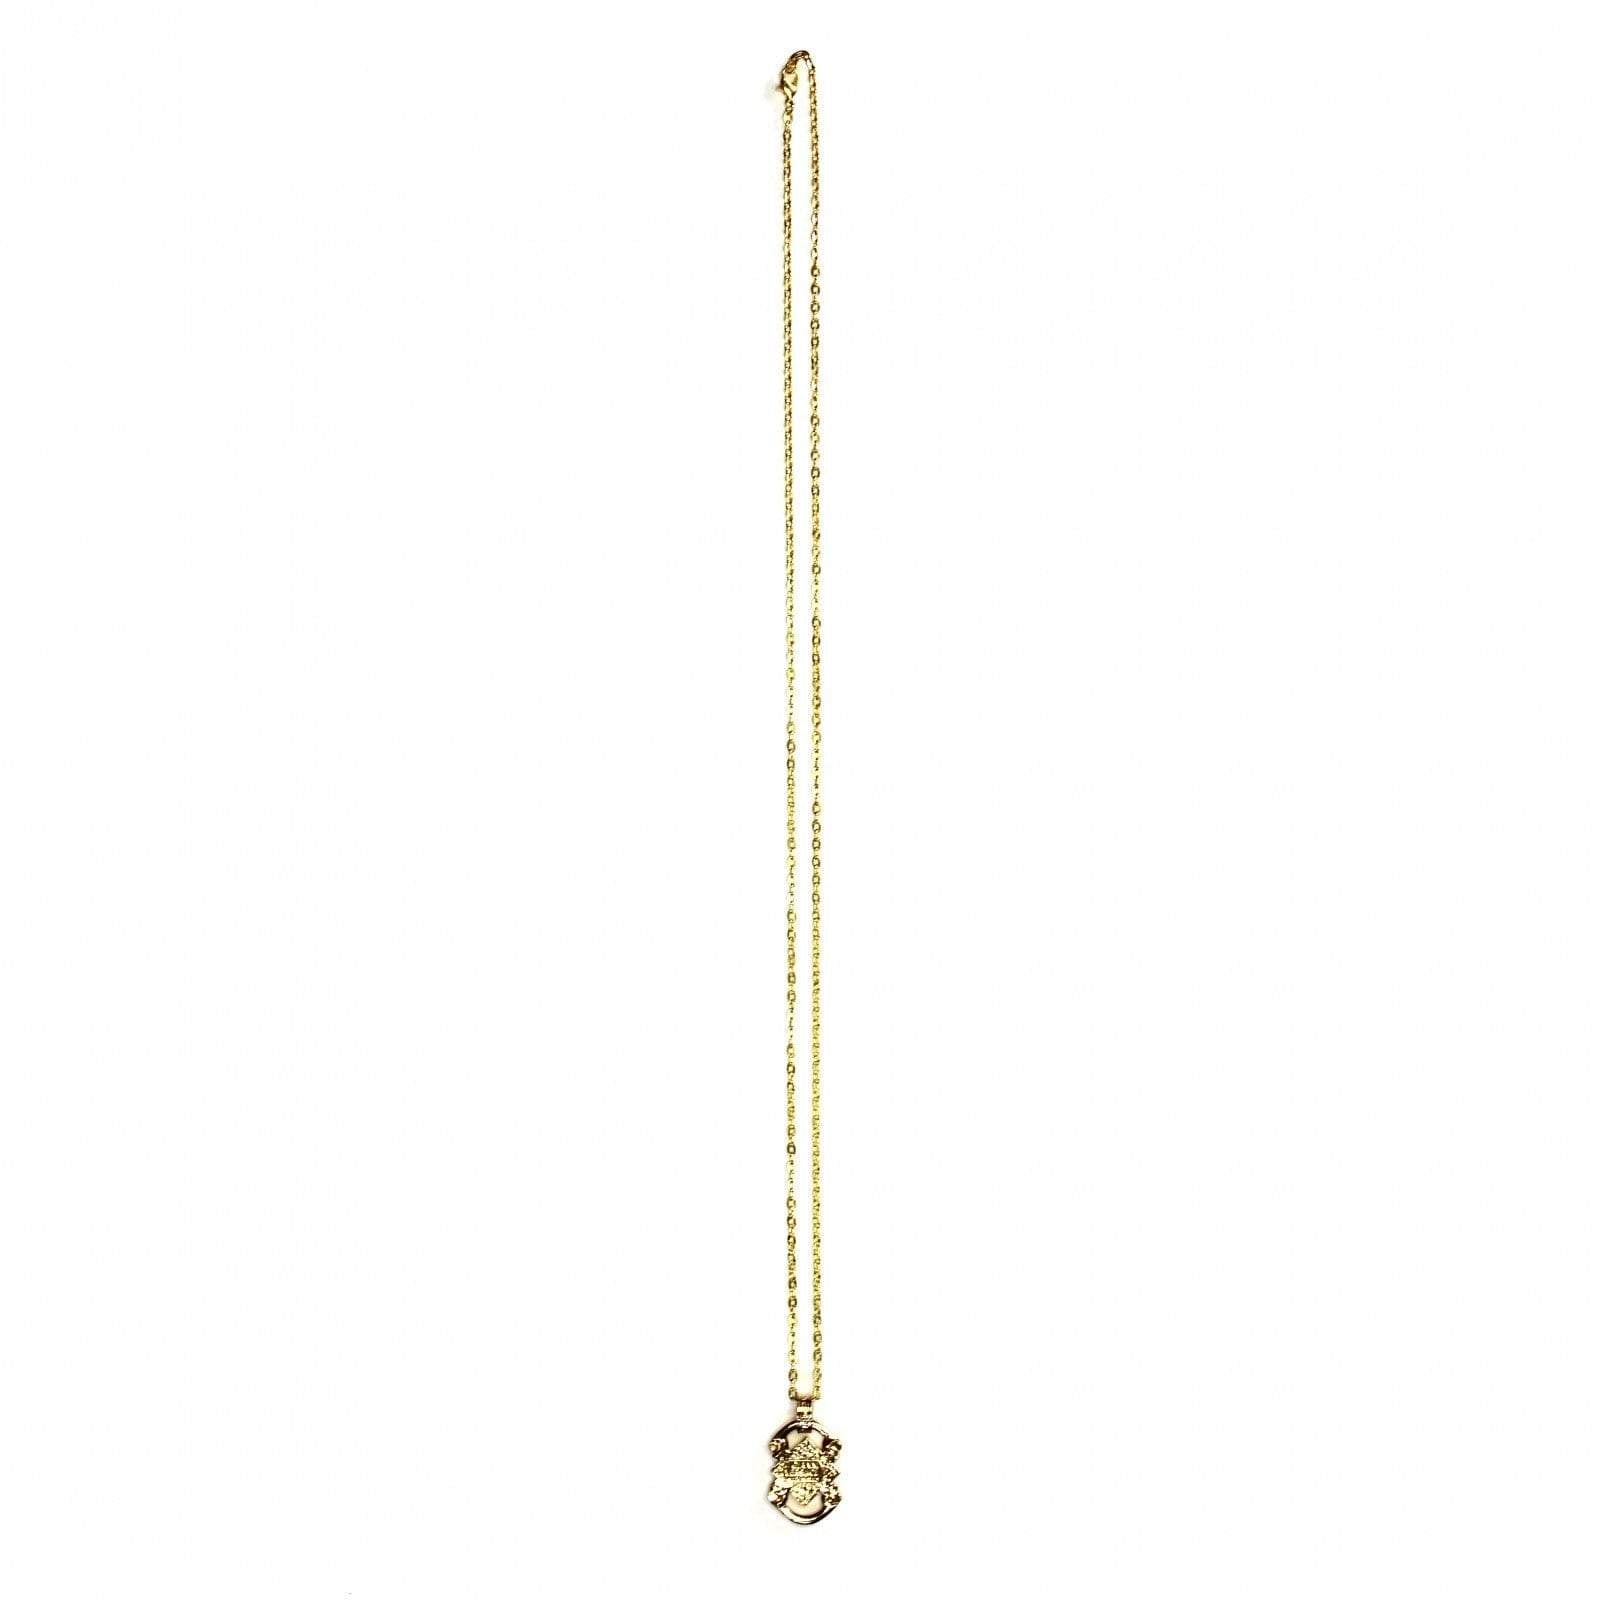 Gold Gianni Versace Medusa Head Greek Key Detailed Pendent Chain RSTKD Vintage